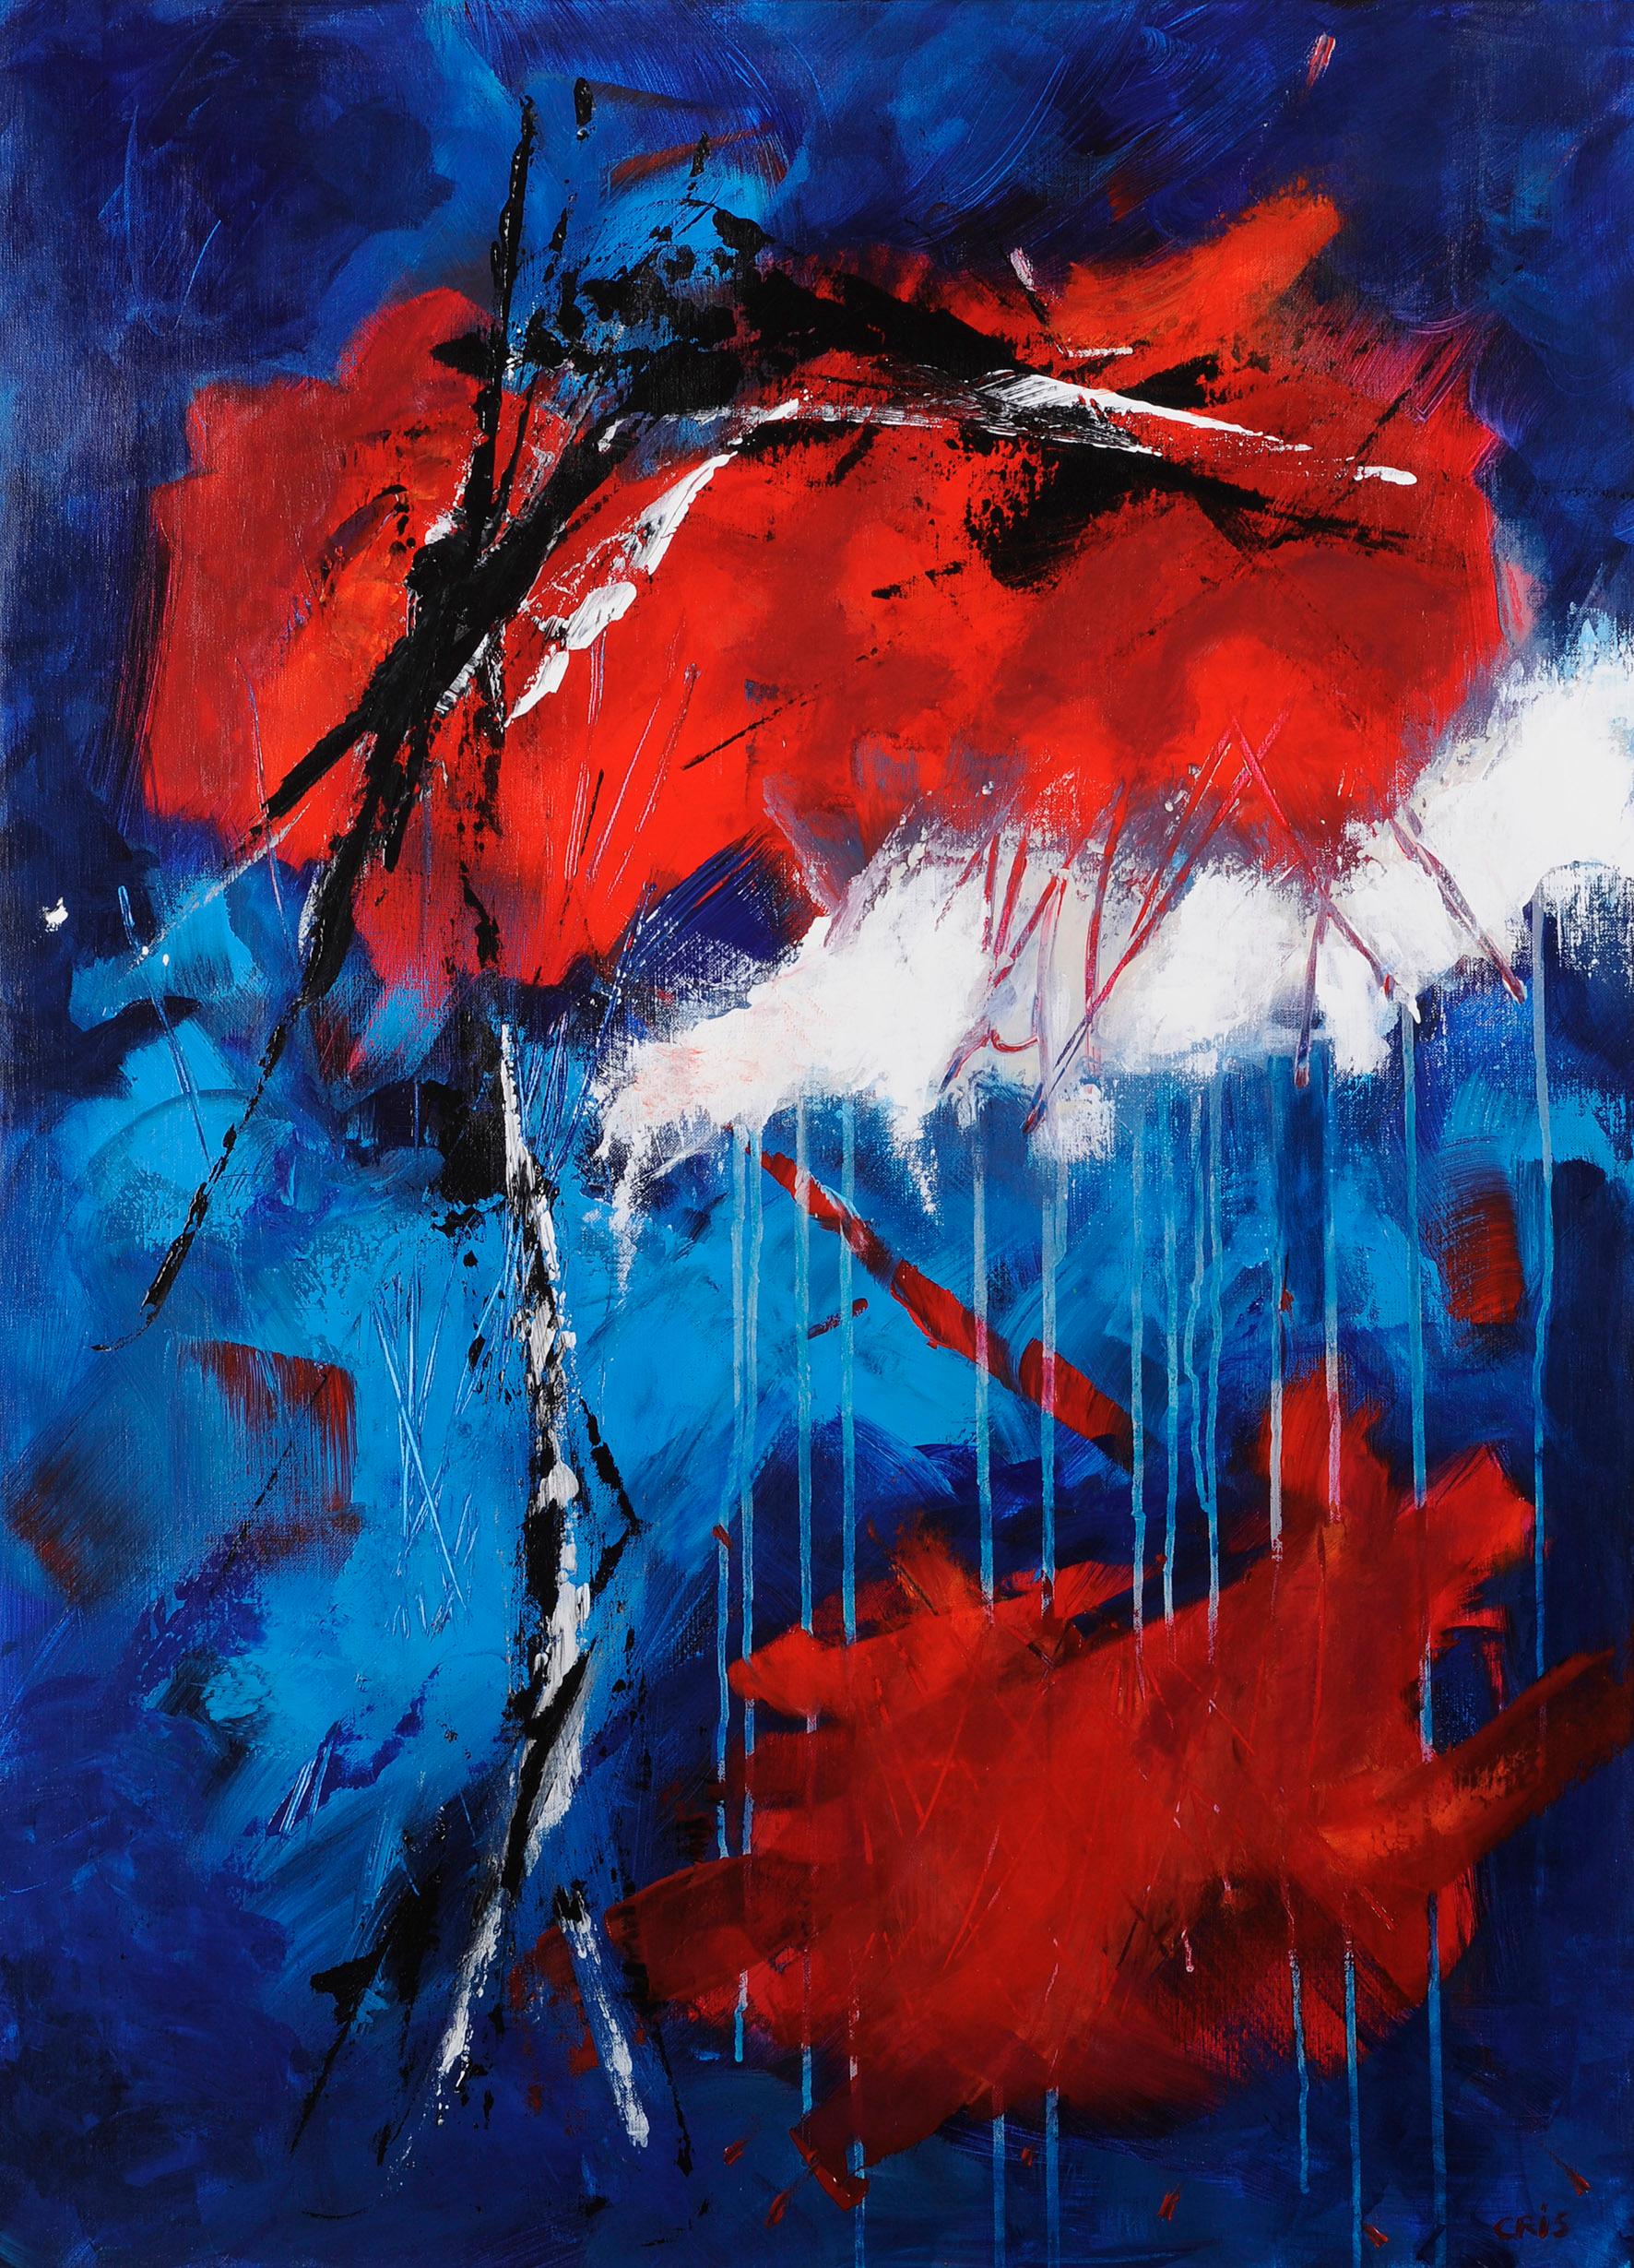 French Original 'Expression Lyrique en Bleu et Rouge' Abstract Painting For Sale